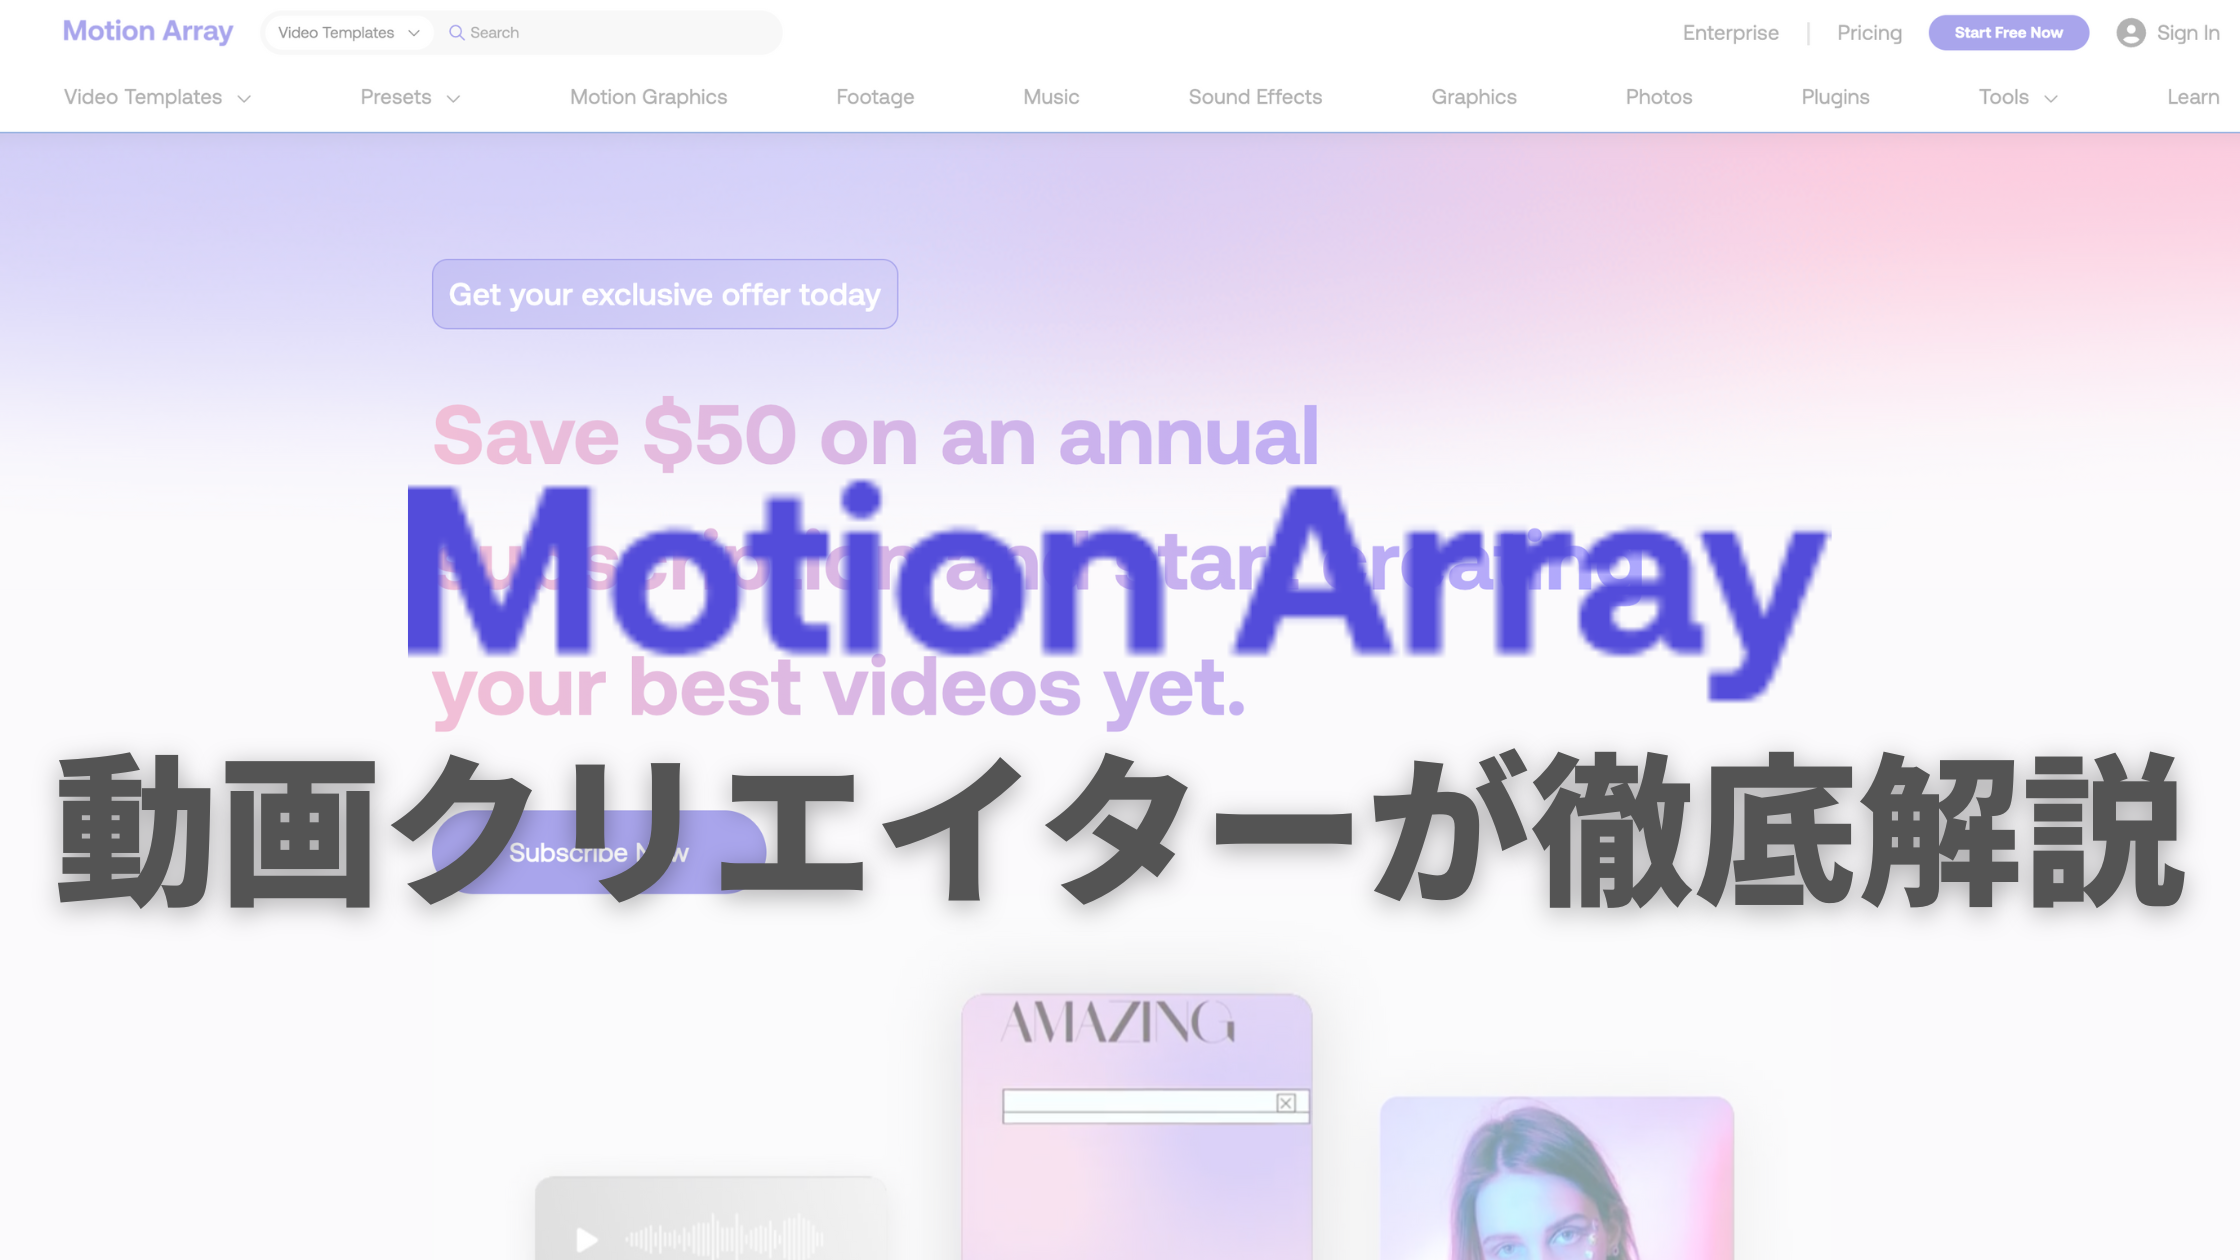 Motion Array